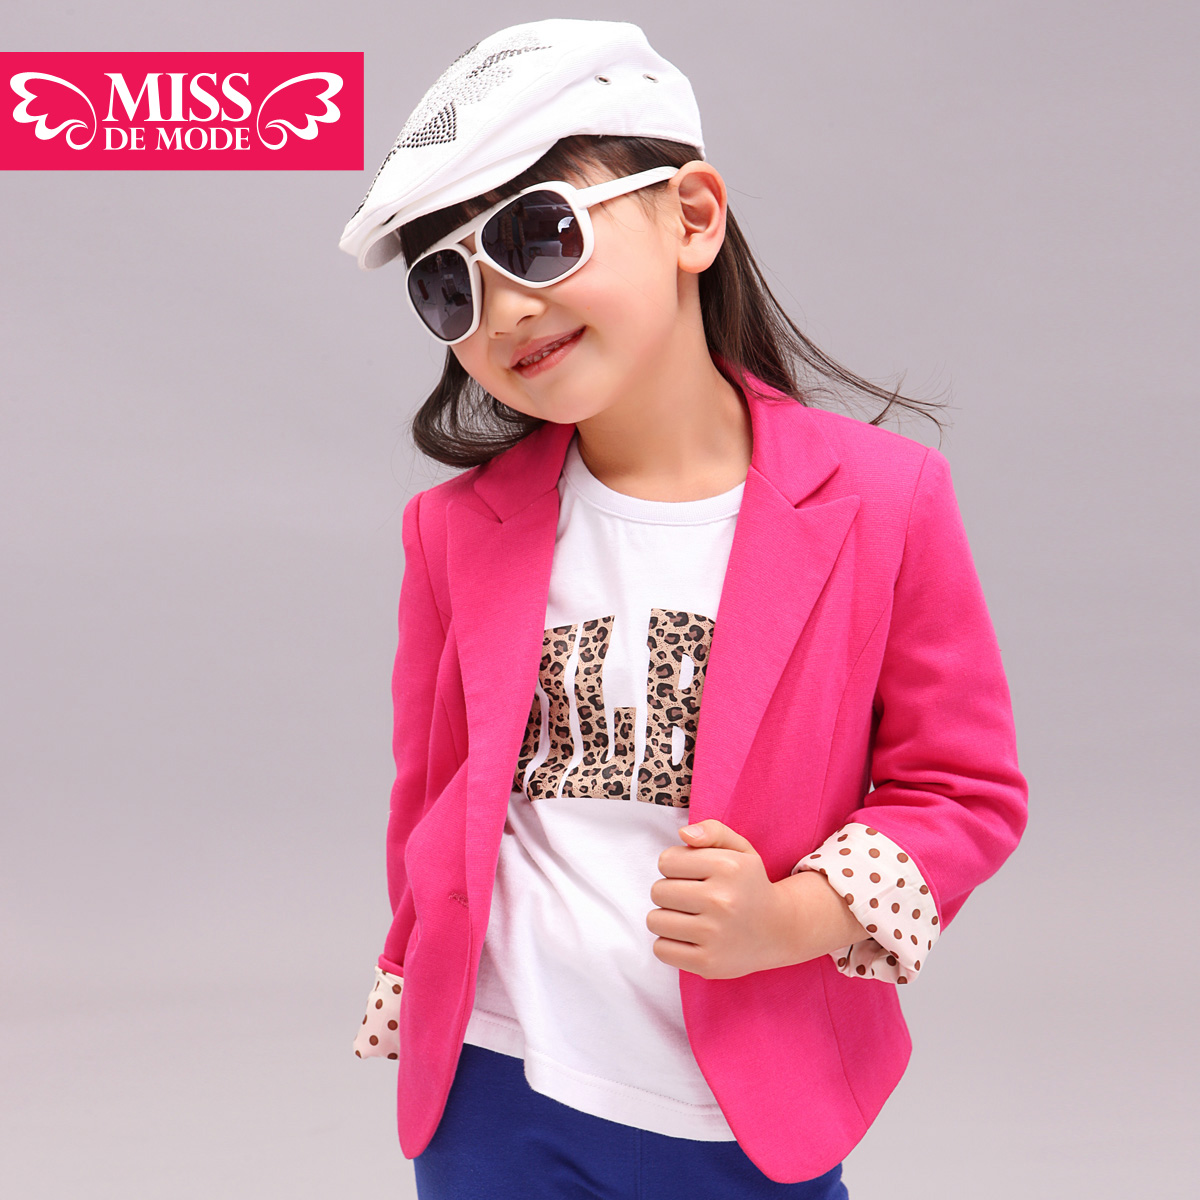 Children's clothing female child elegant candy color blazer 2013 spring child suit jacket